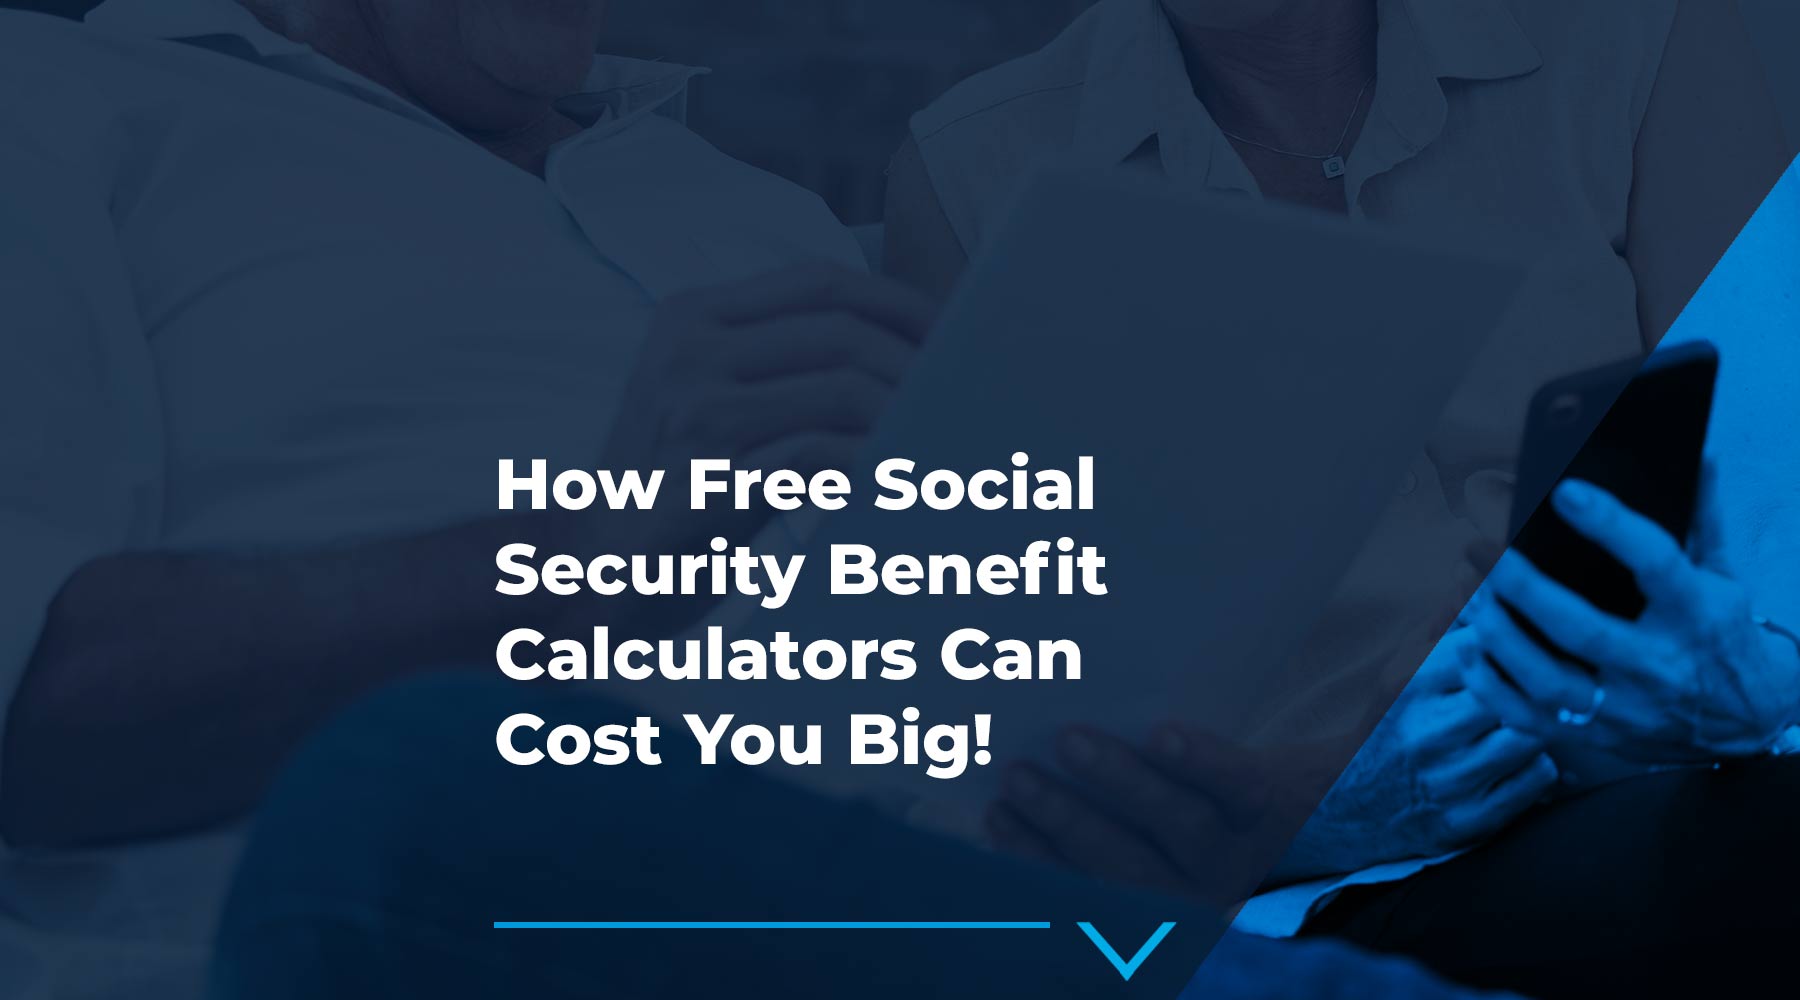 How Free Social Security Benefit Calculators Can Cost You Big!